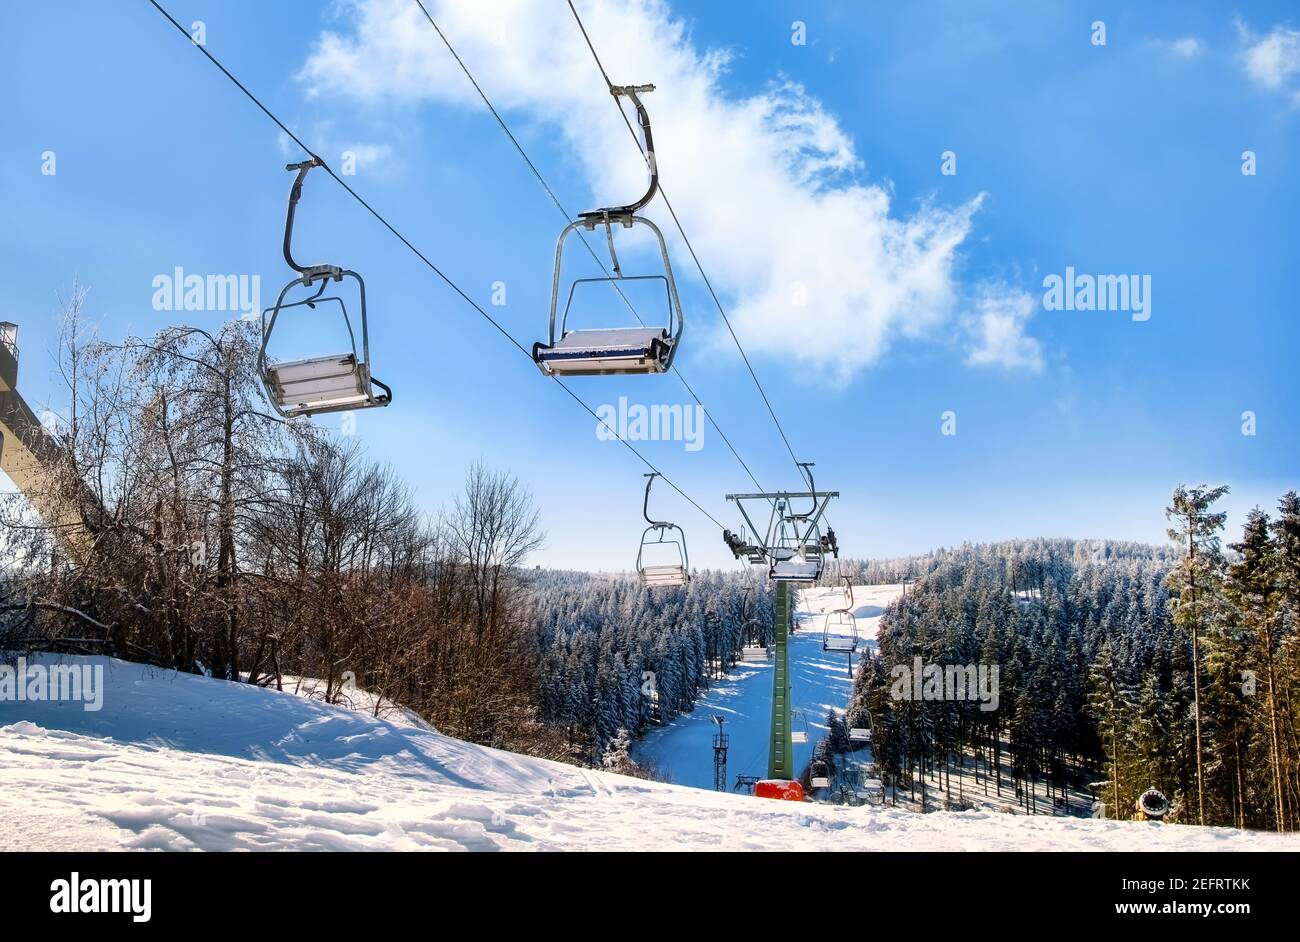 Ski resort in winter near Winterberg in the Hochsauerland district of North Rhine-Westphalia Stock Photo